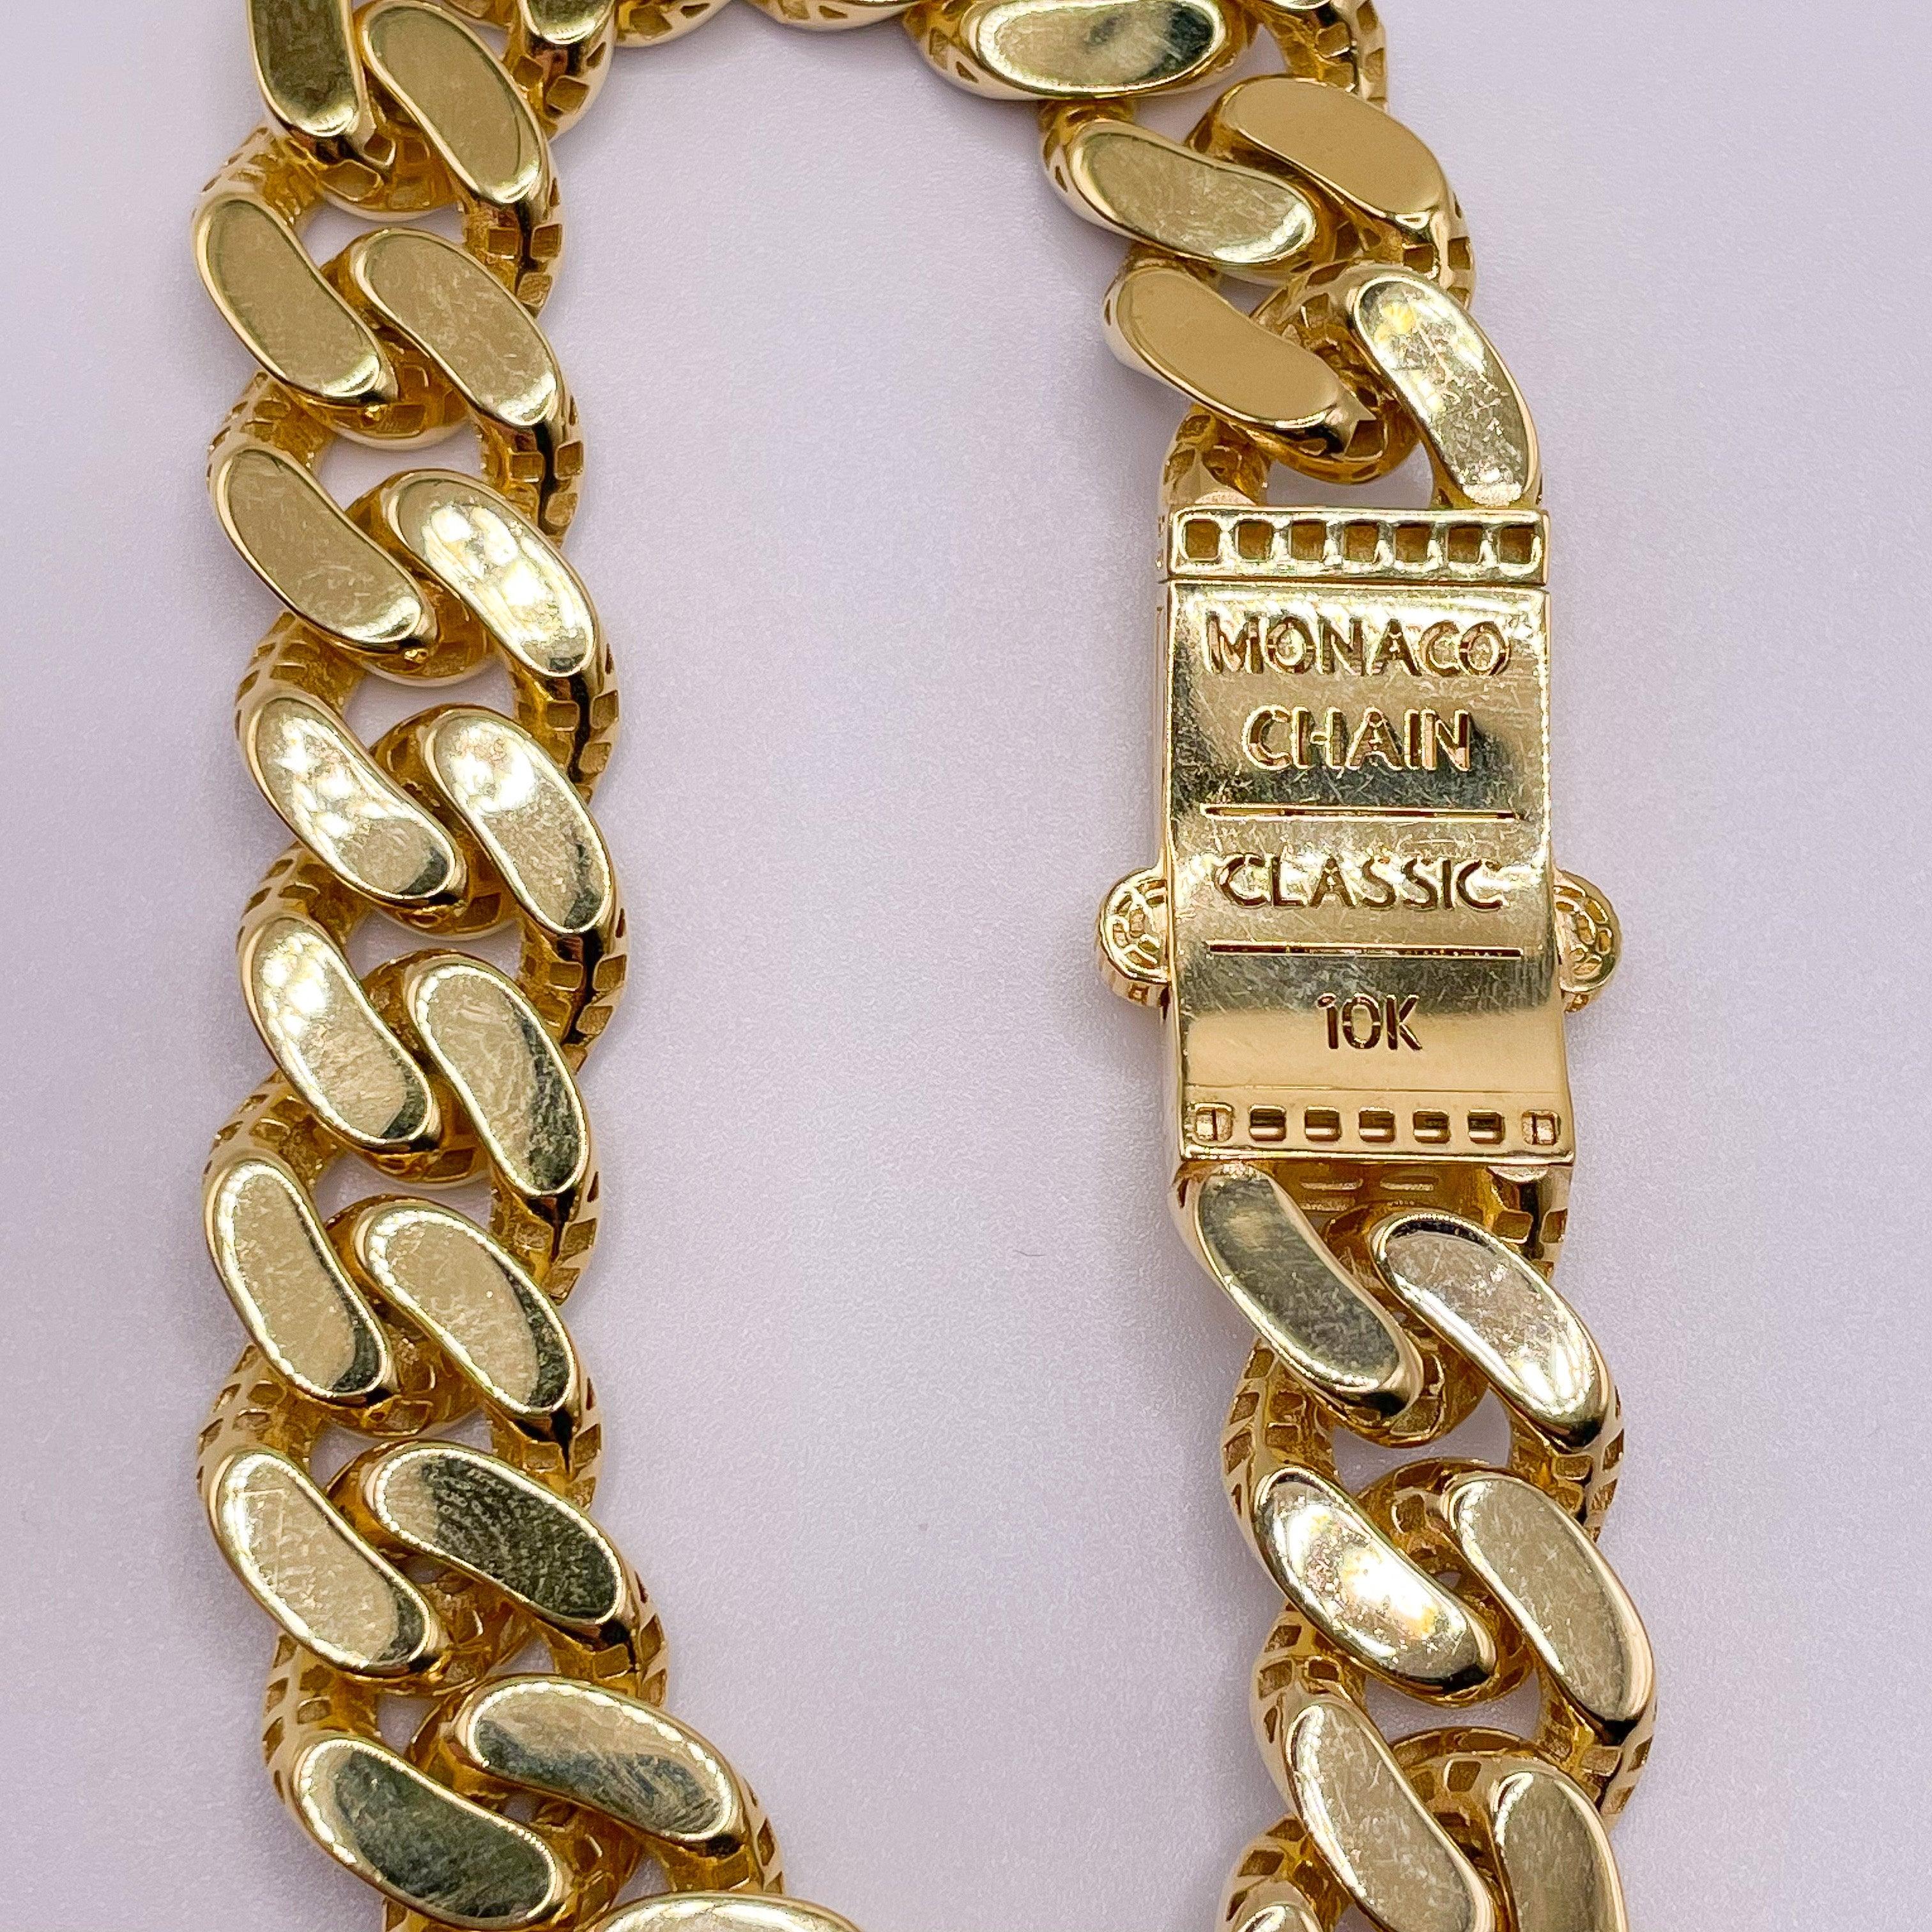 Amazon.com: Nuragold 10k Yellow Gold 9mm Royal Monaco Miami Cuban Link  Chain Bracelet, Mens Jewelry Fancy Box Clasp 7